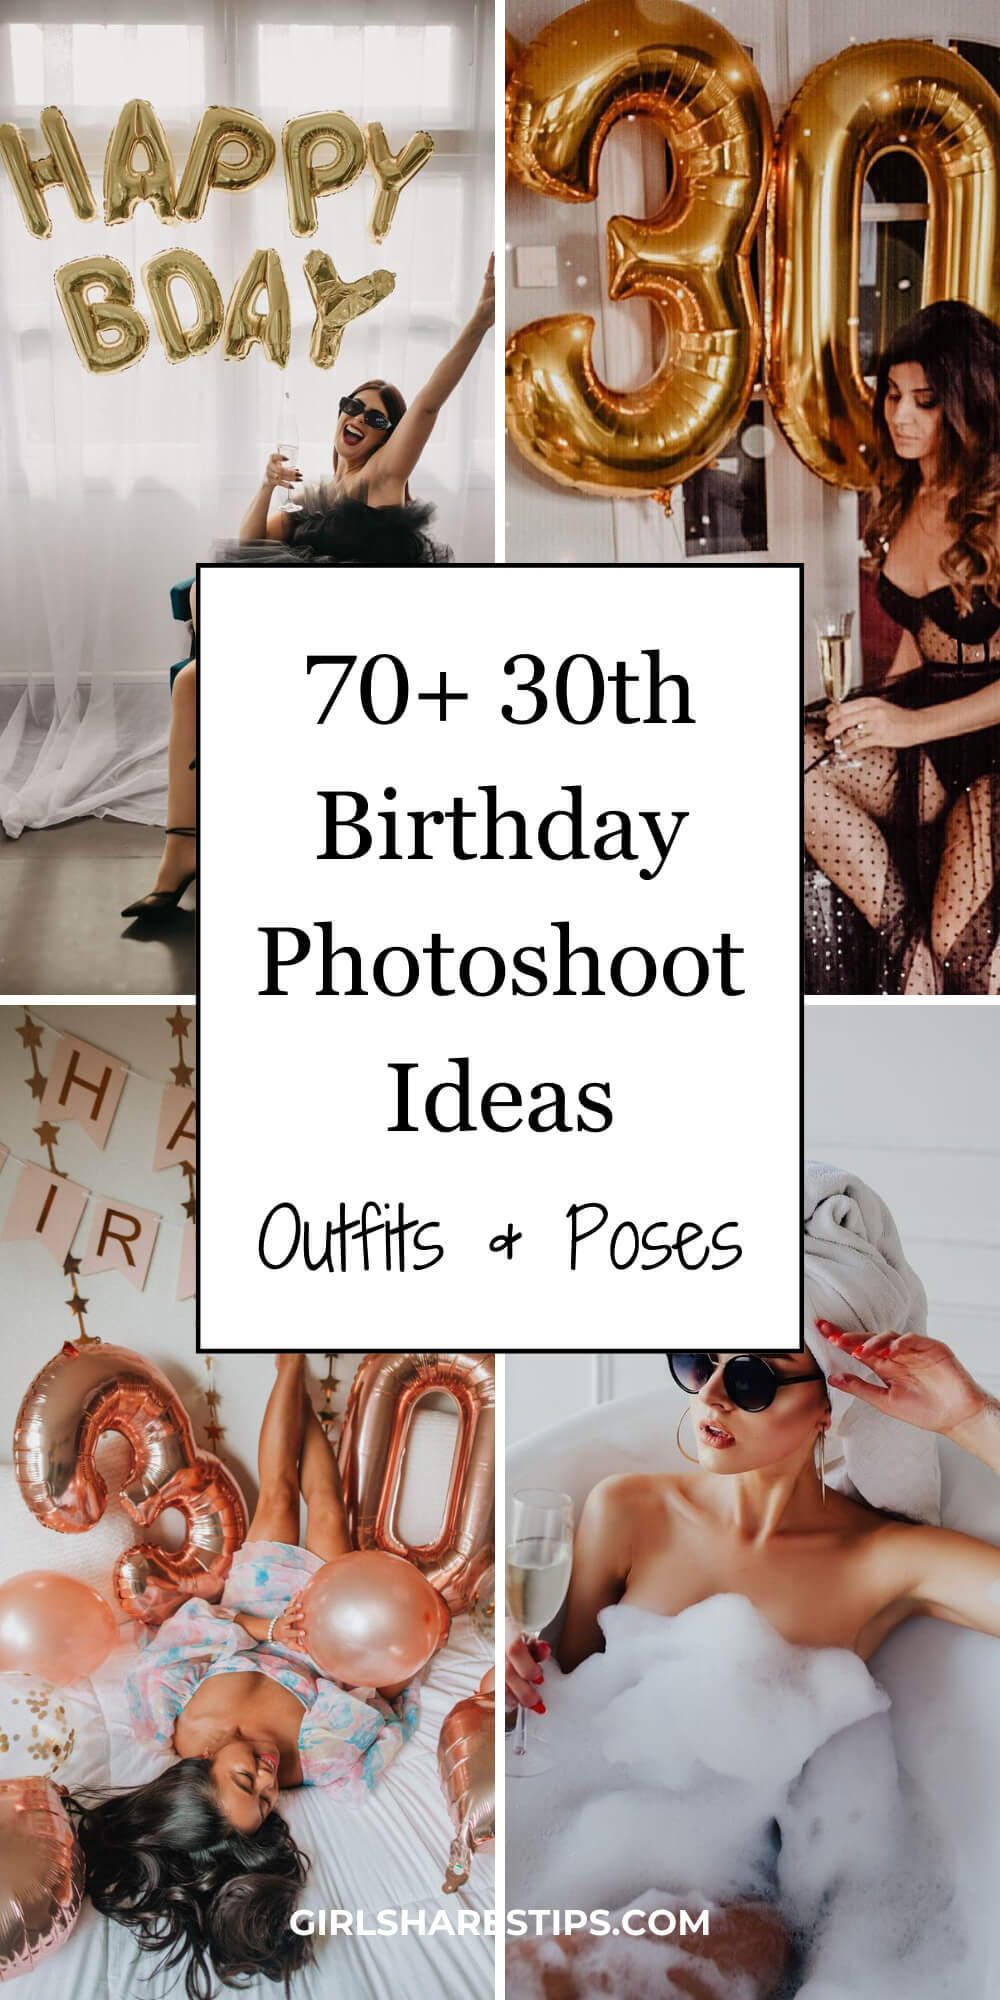 30th birthday photoshoot ideas